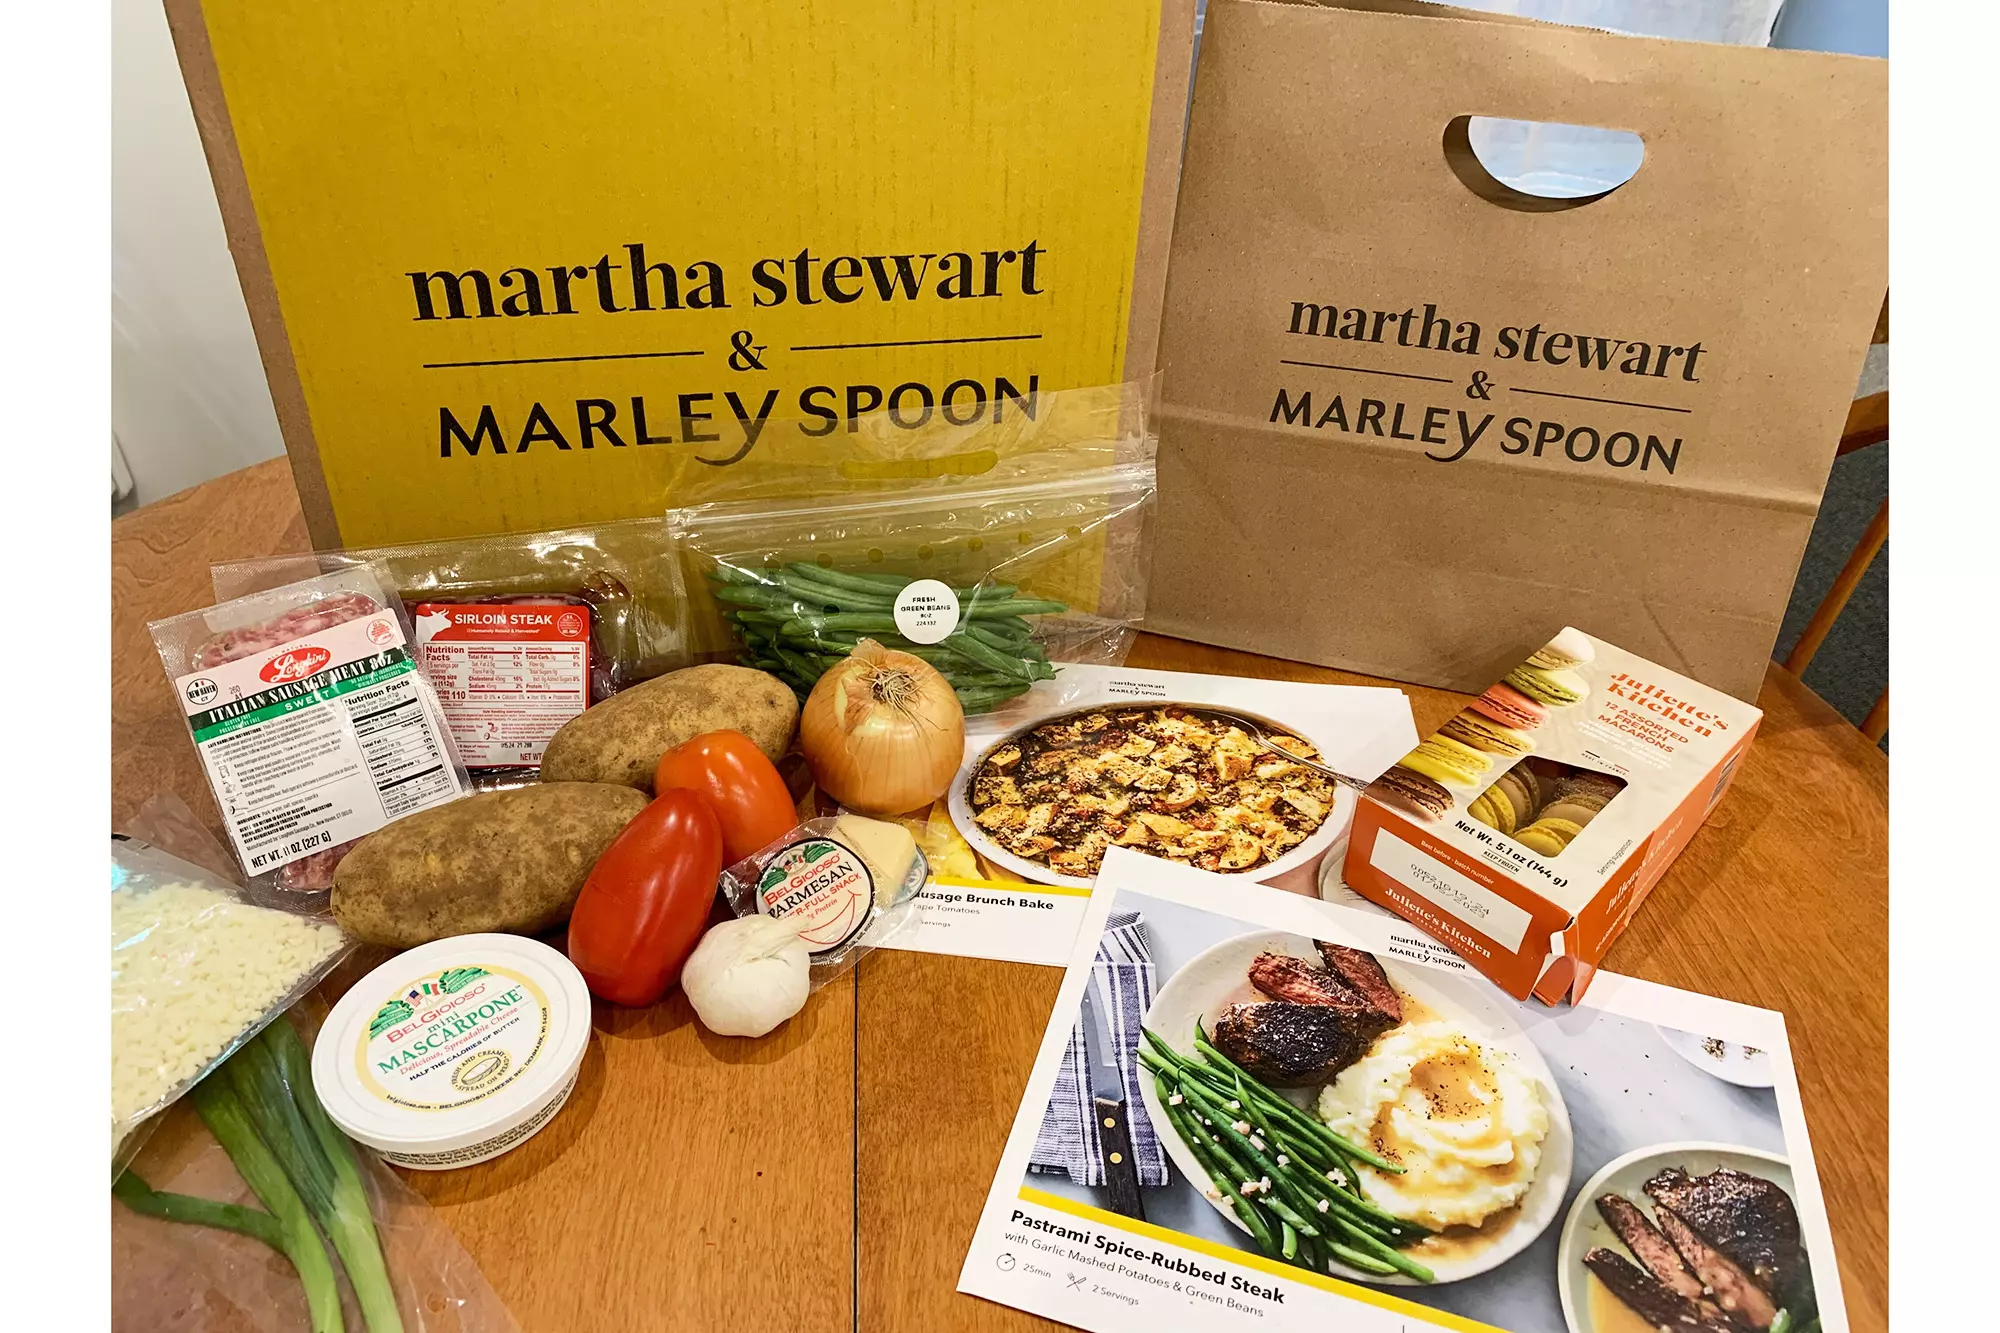 Martha & Marley Spoon